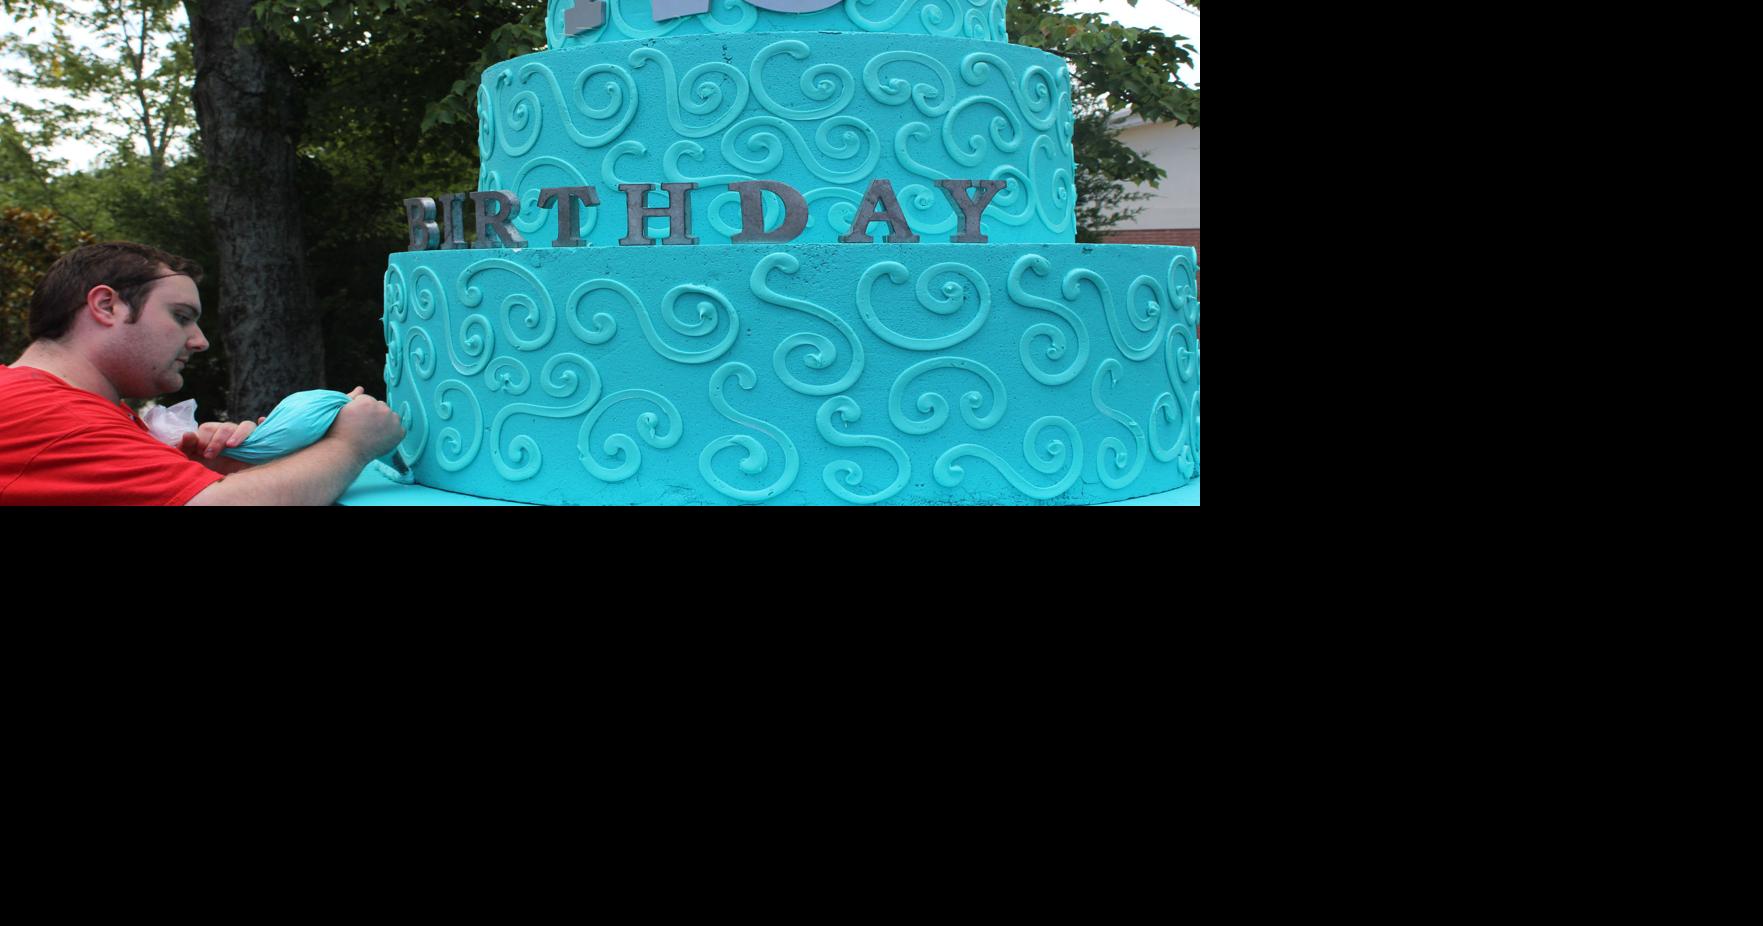 Birthday celebration for Smyrna on Saturday to feature massive cake